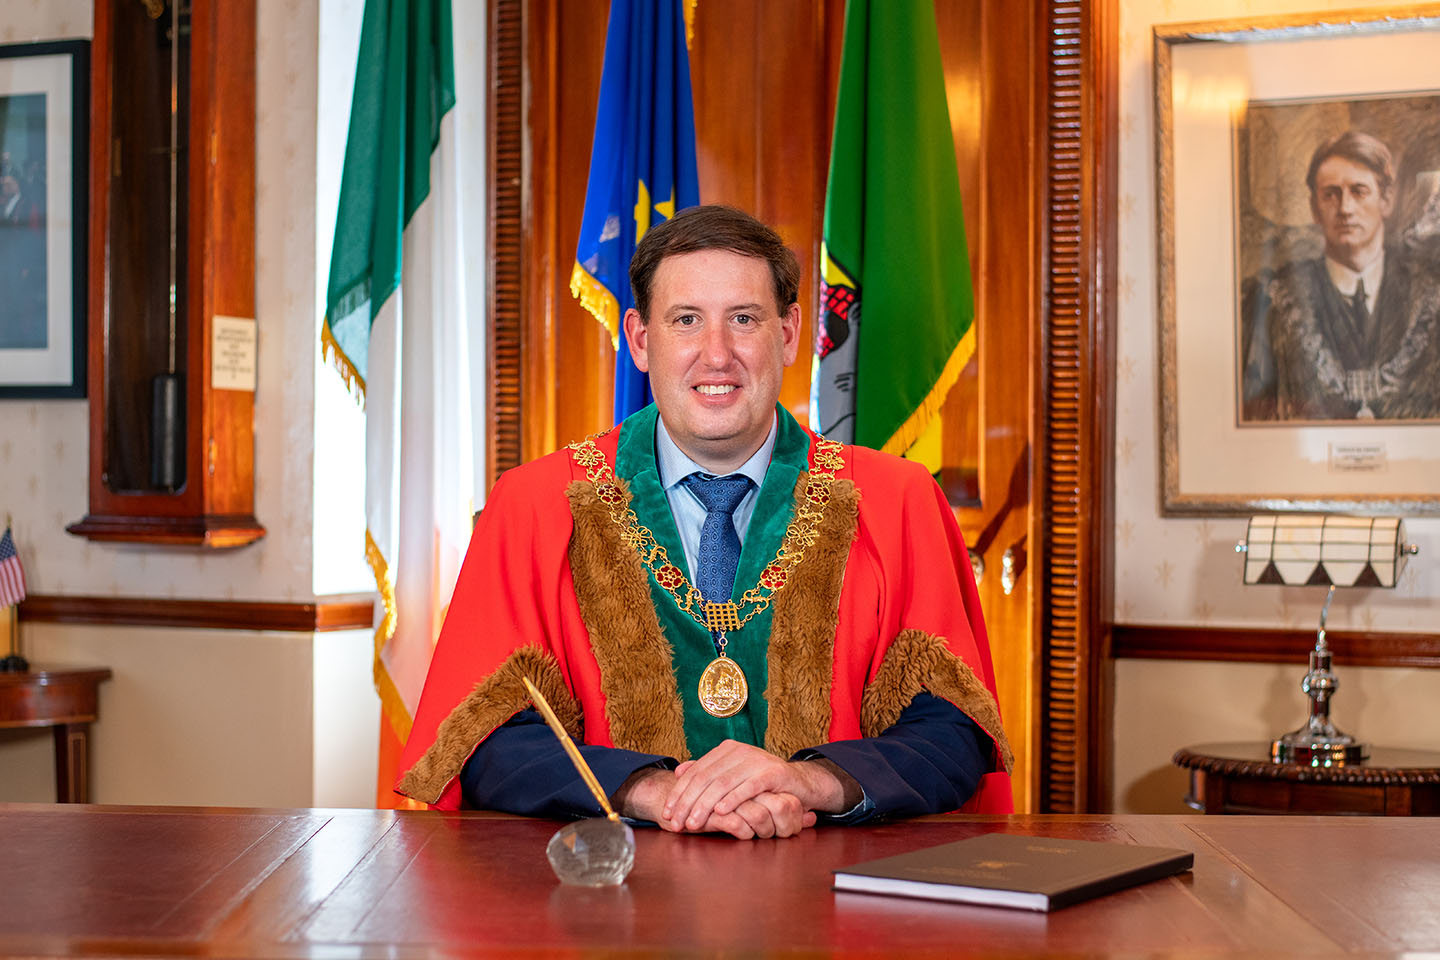 Lord Mayor sitting at desk